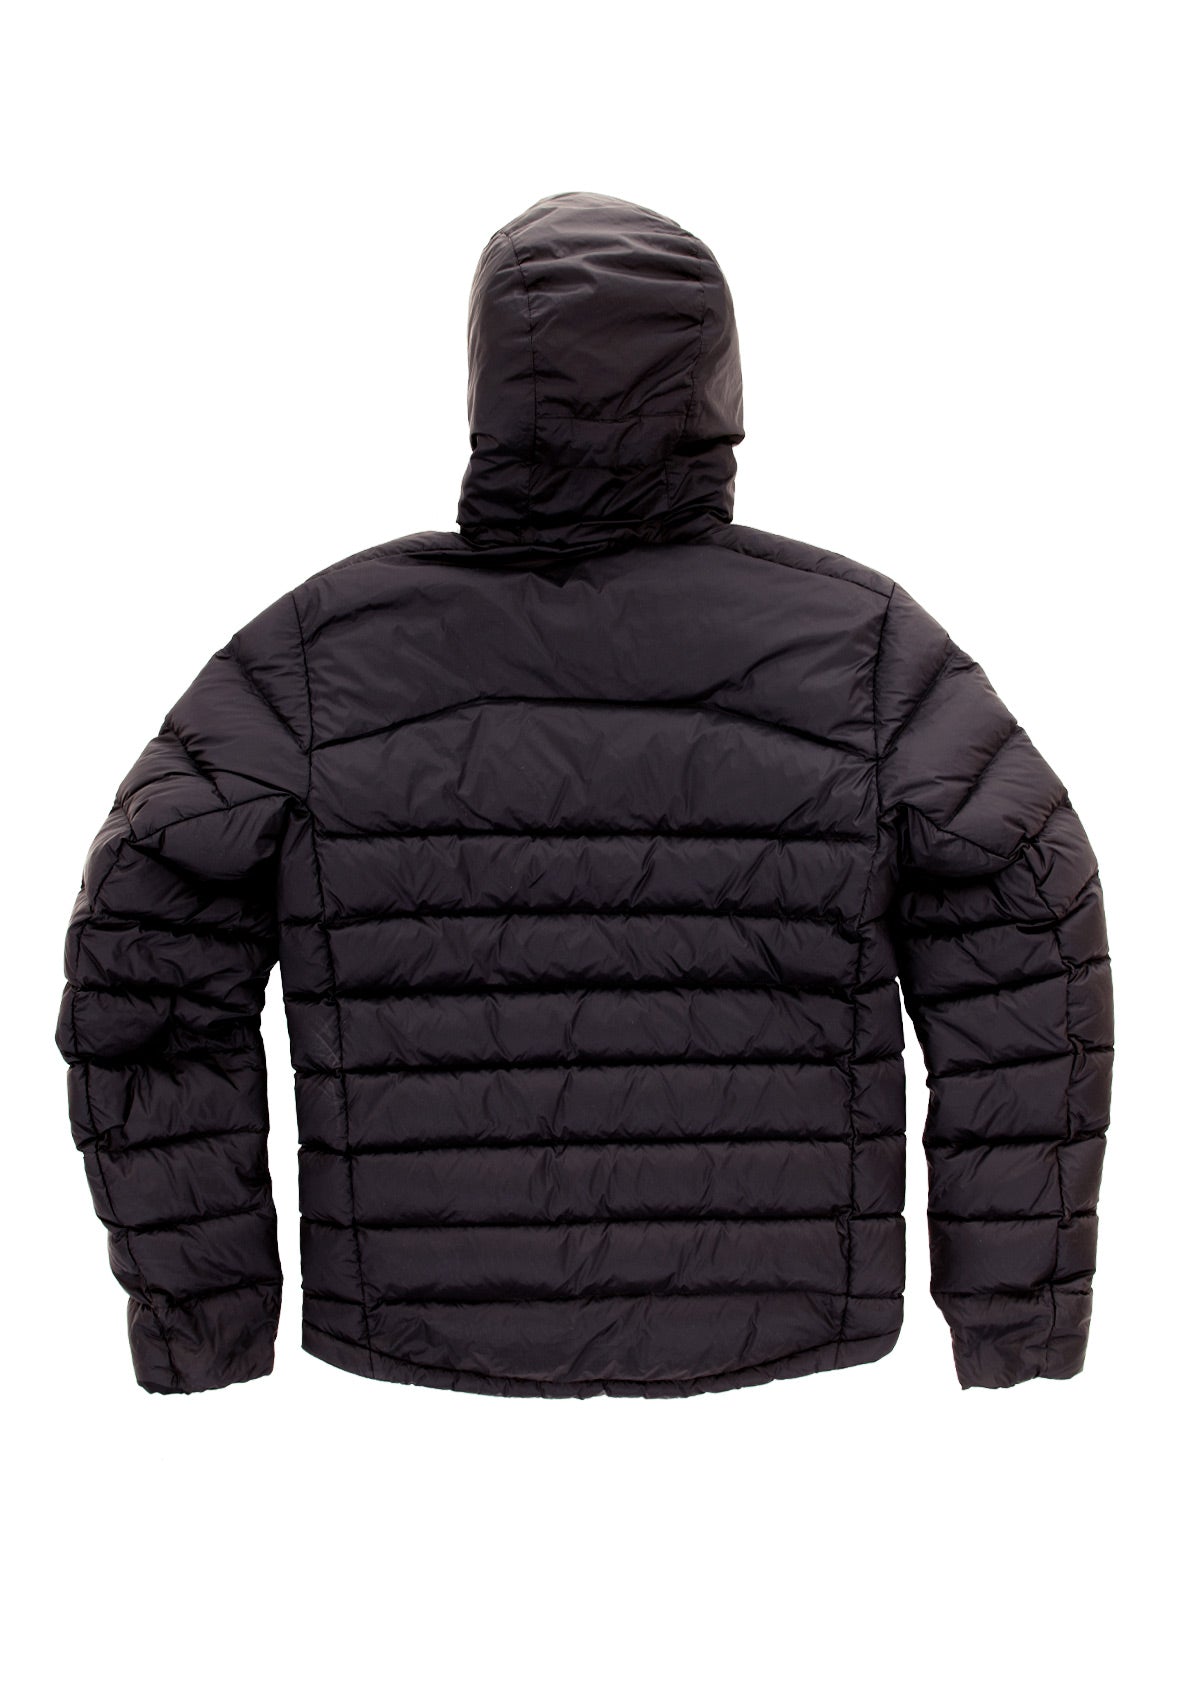 needessentials 750 down layer jacket puffer winter non branded black